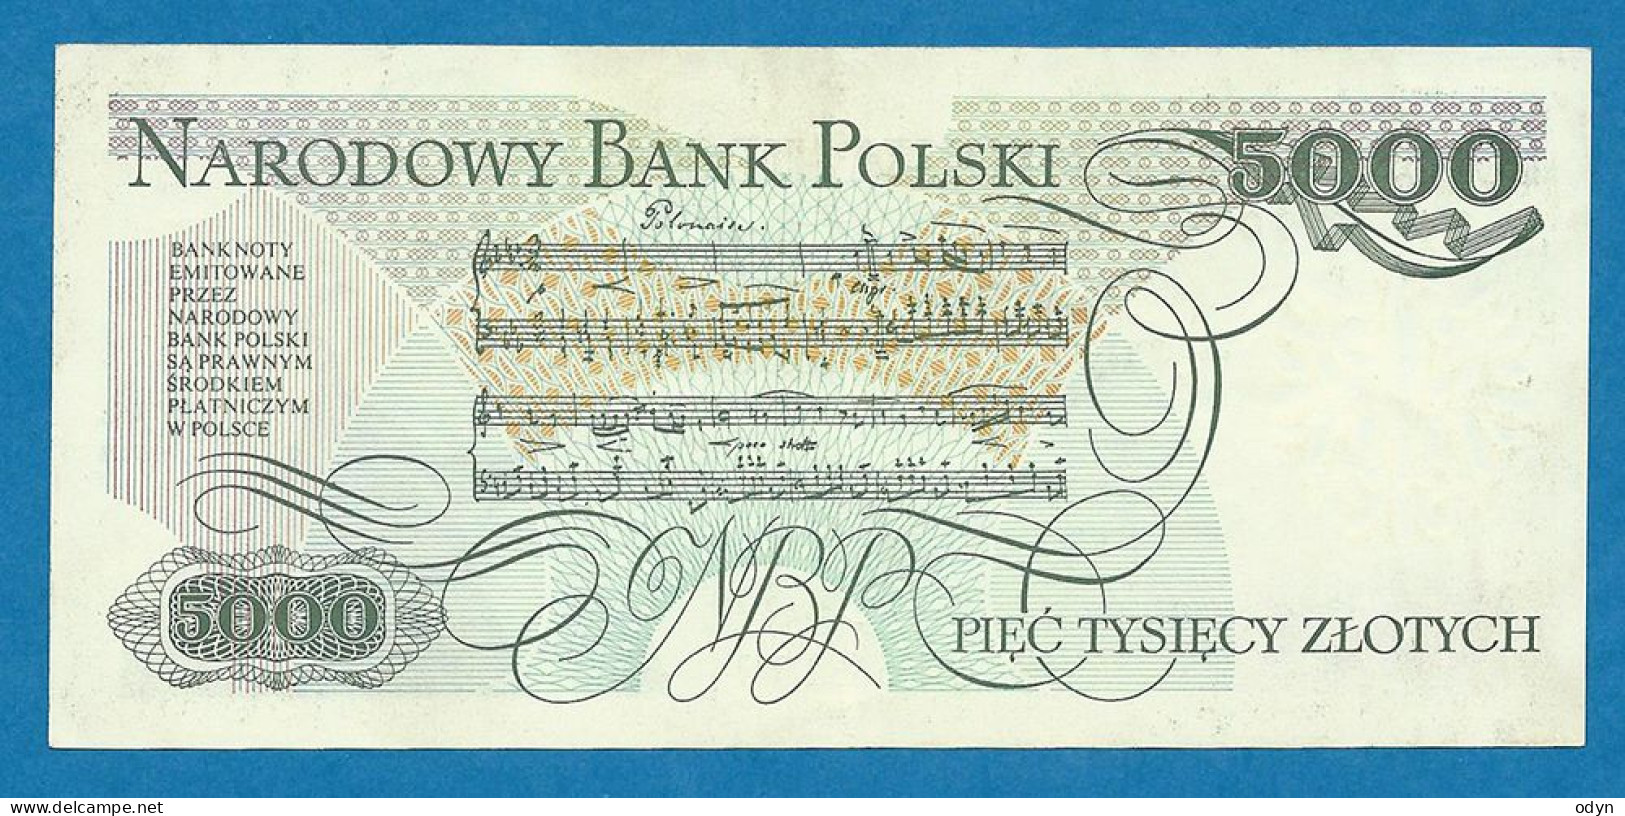 Poland, 1982, 5 000 Zlotych, Ser. K 0162290, AU - Poland